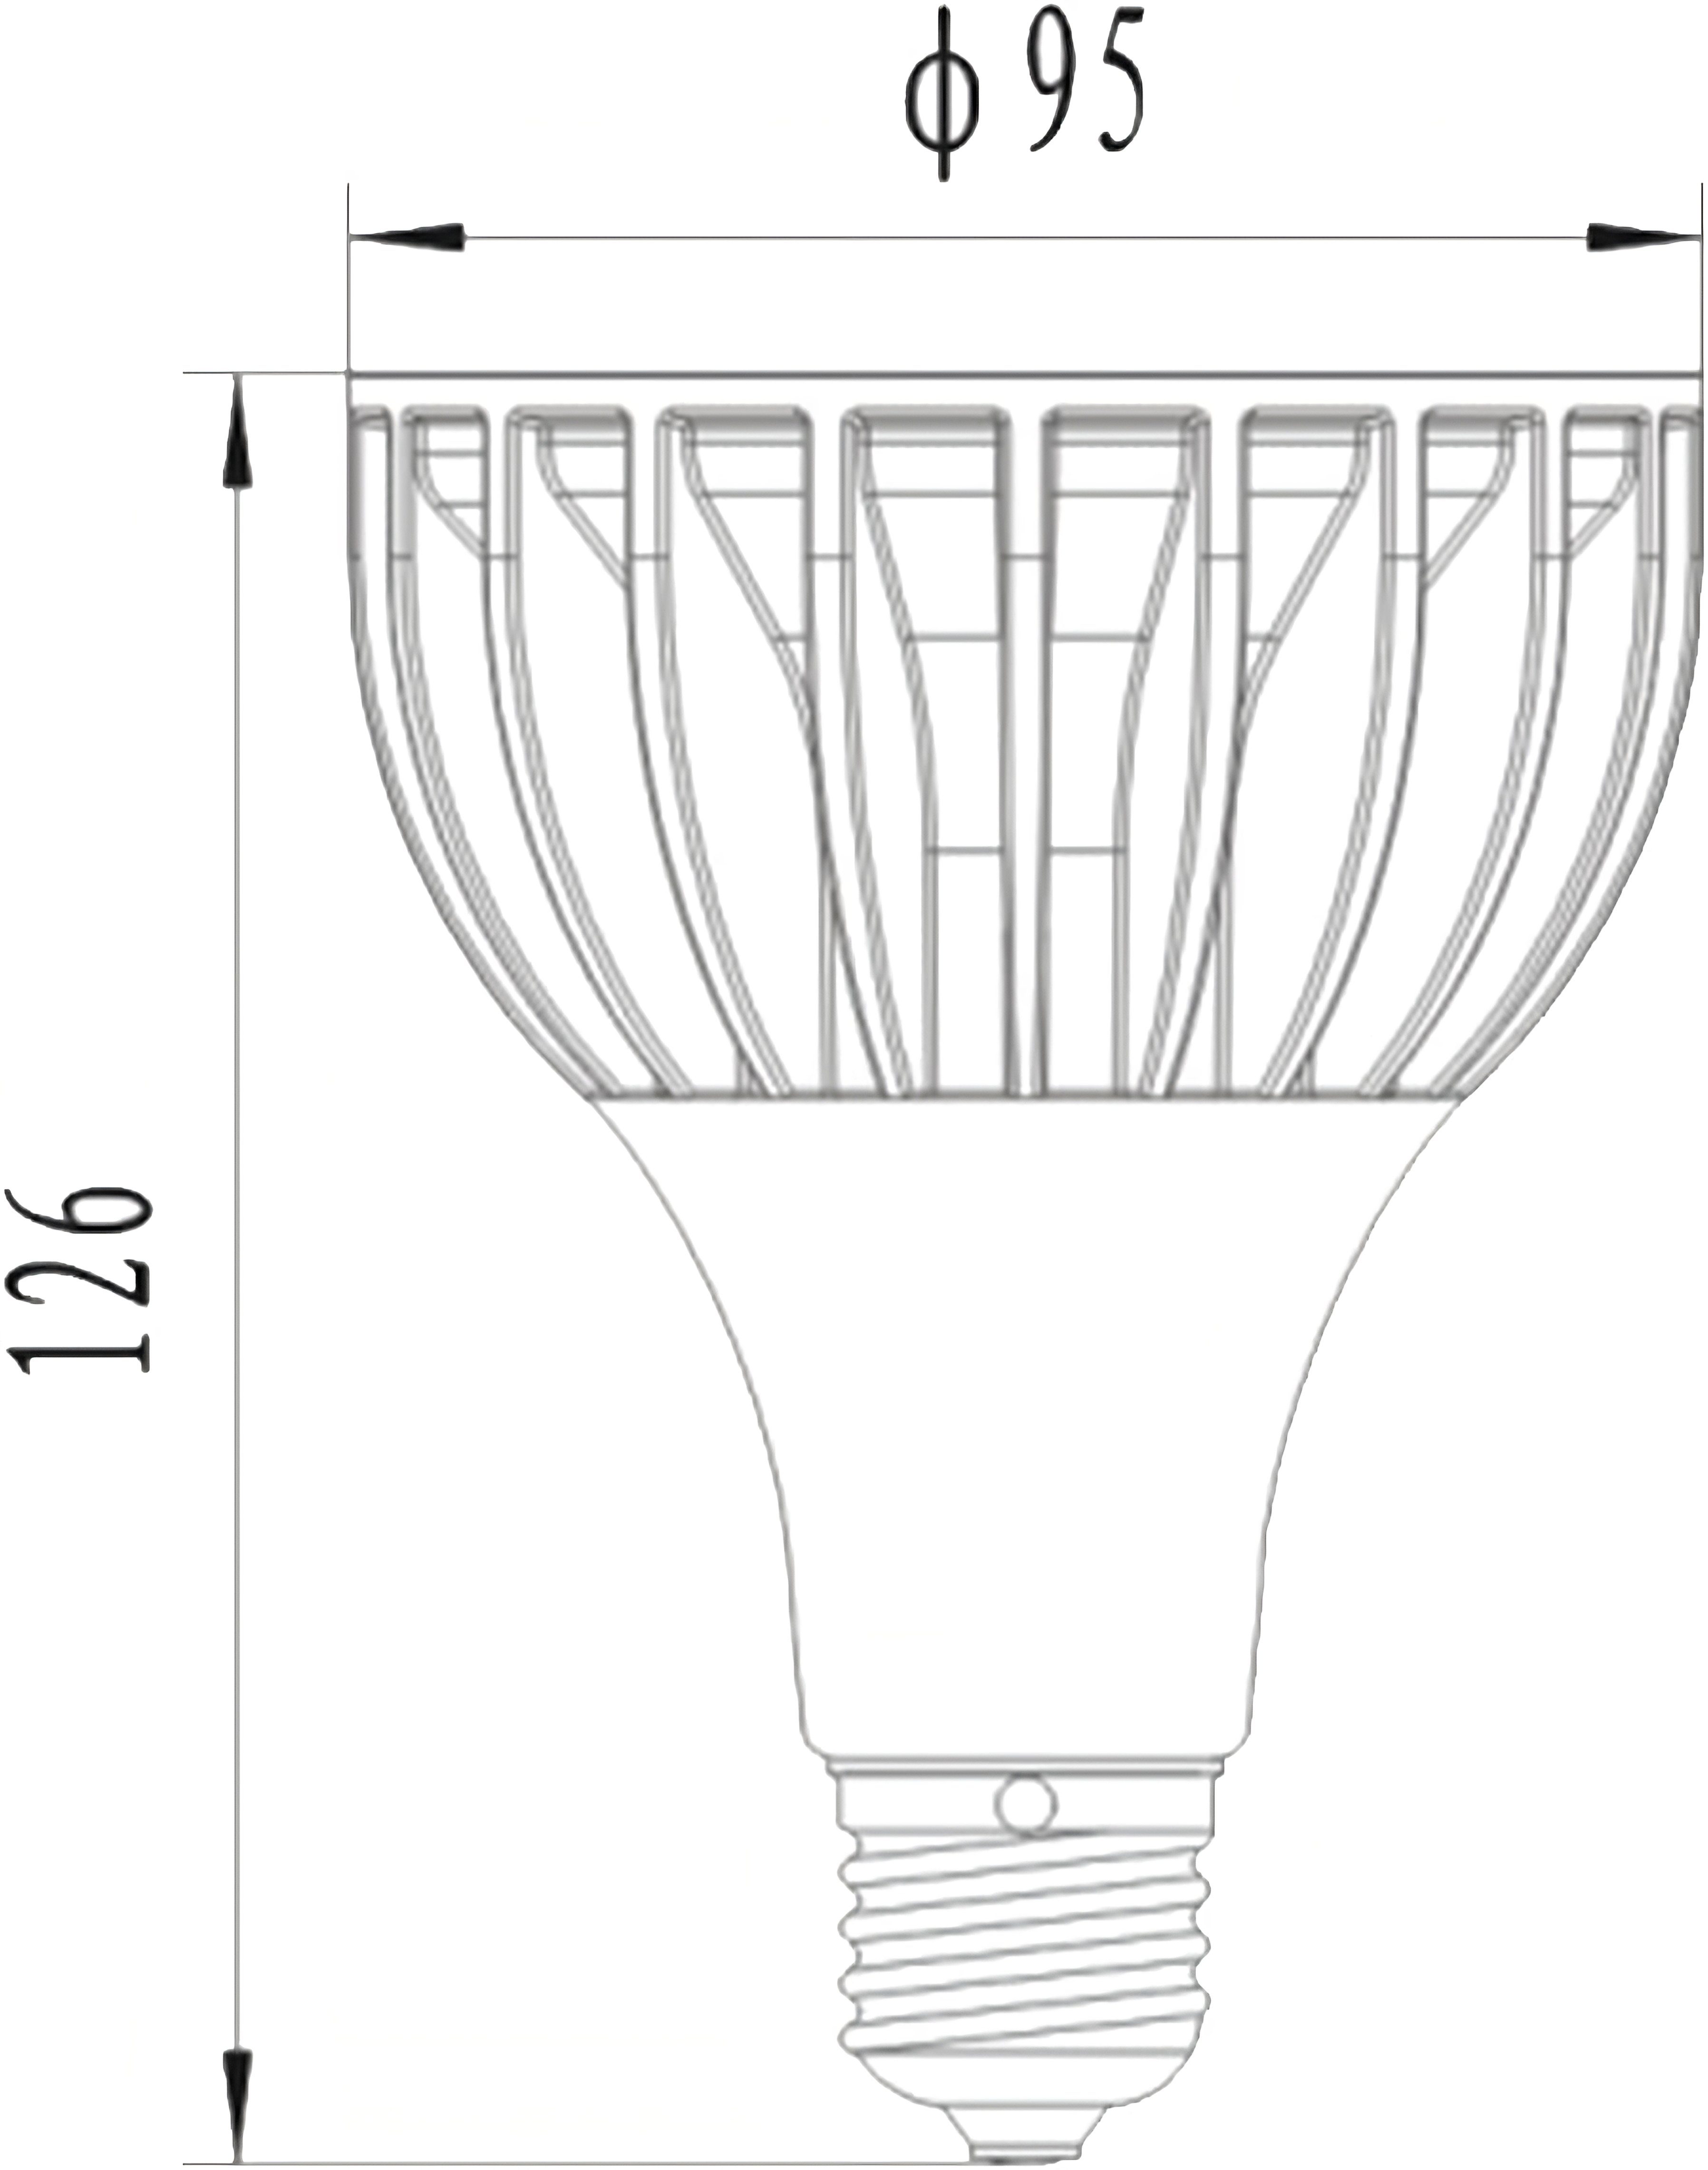 Ersatz warmweiß LED Strahler Lampe 200W LED Deckenspot 20W Ogeled E27 Spot